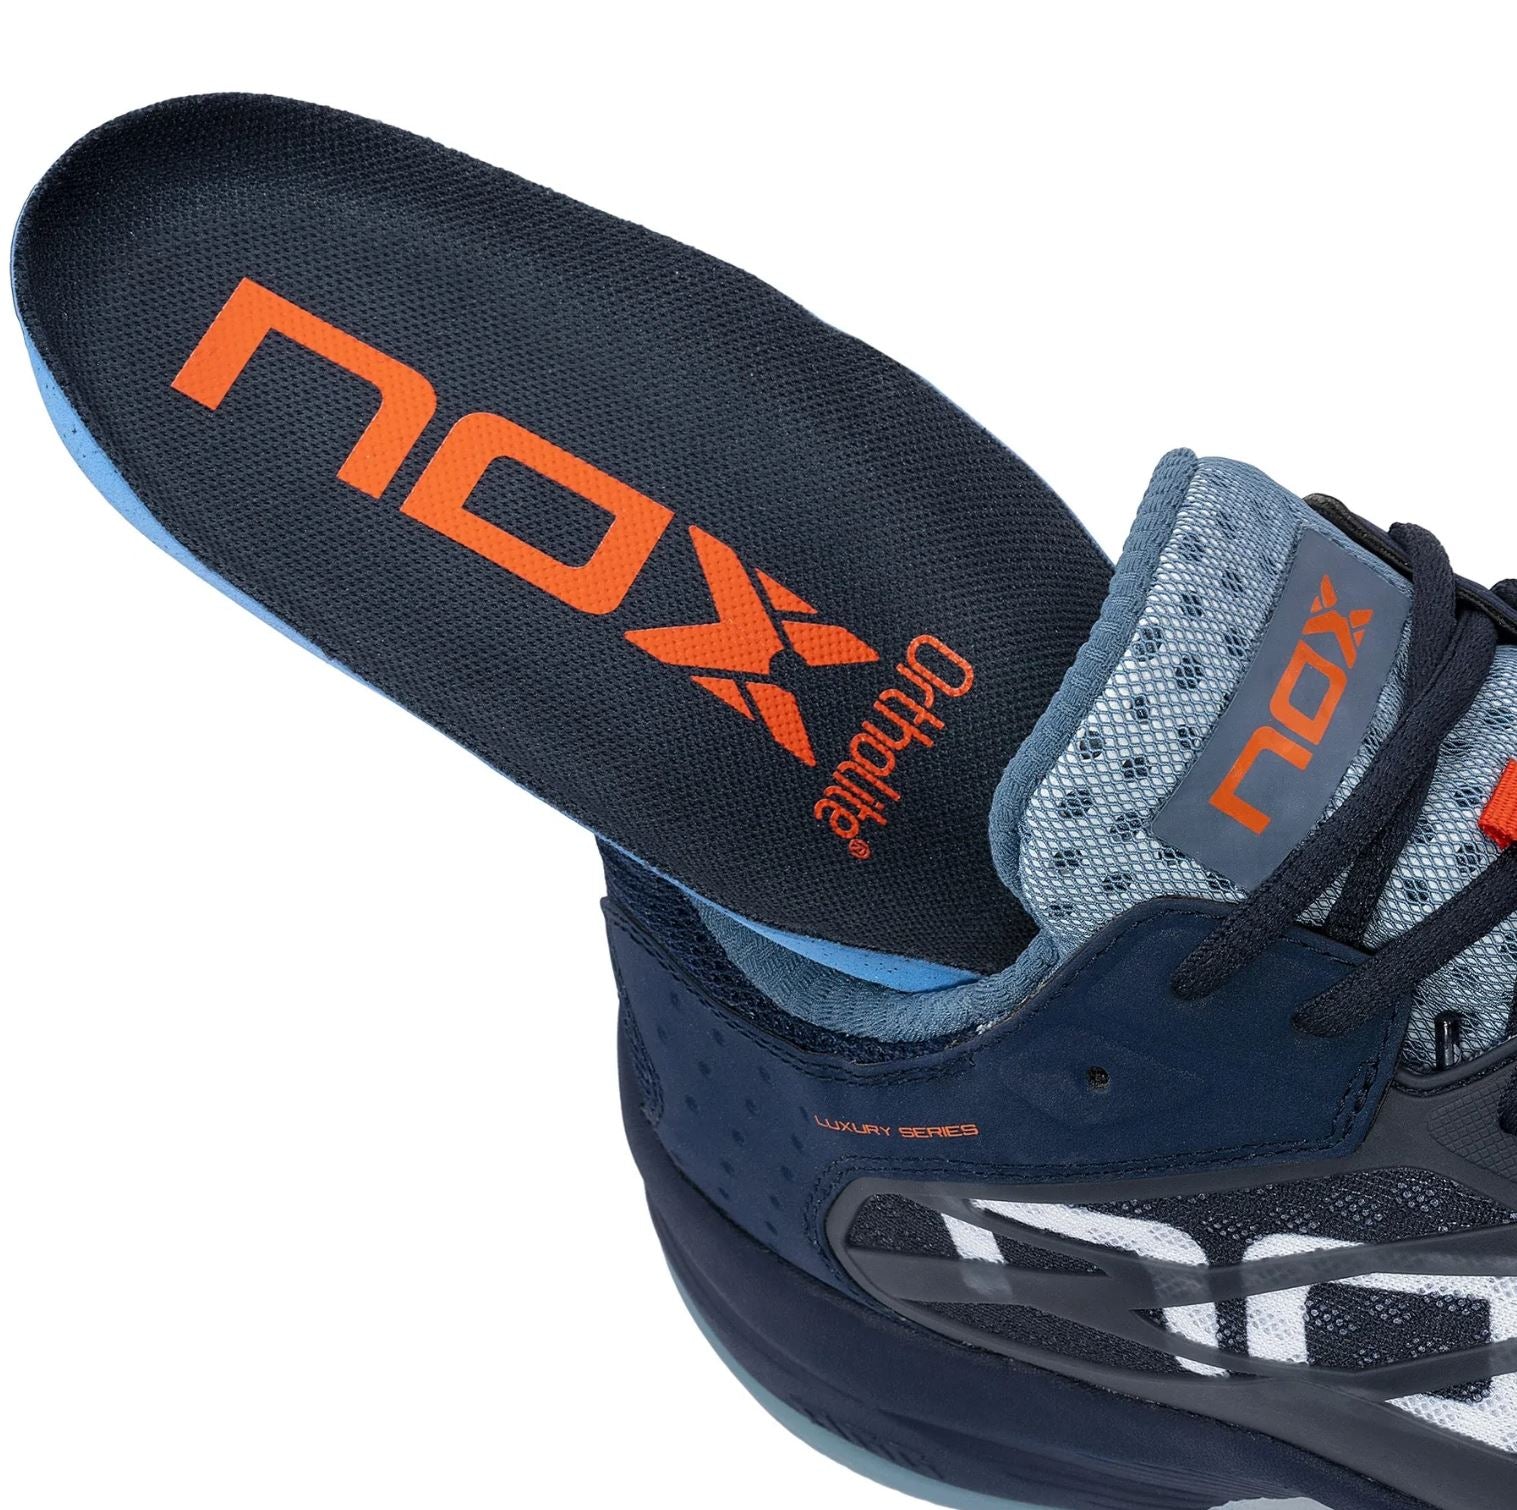 Nox AT10 Luxury Padelsko (Marineblå)